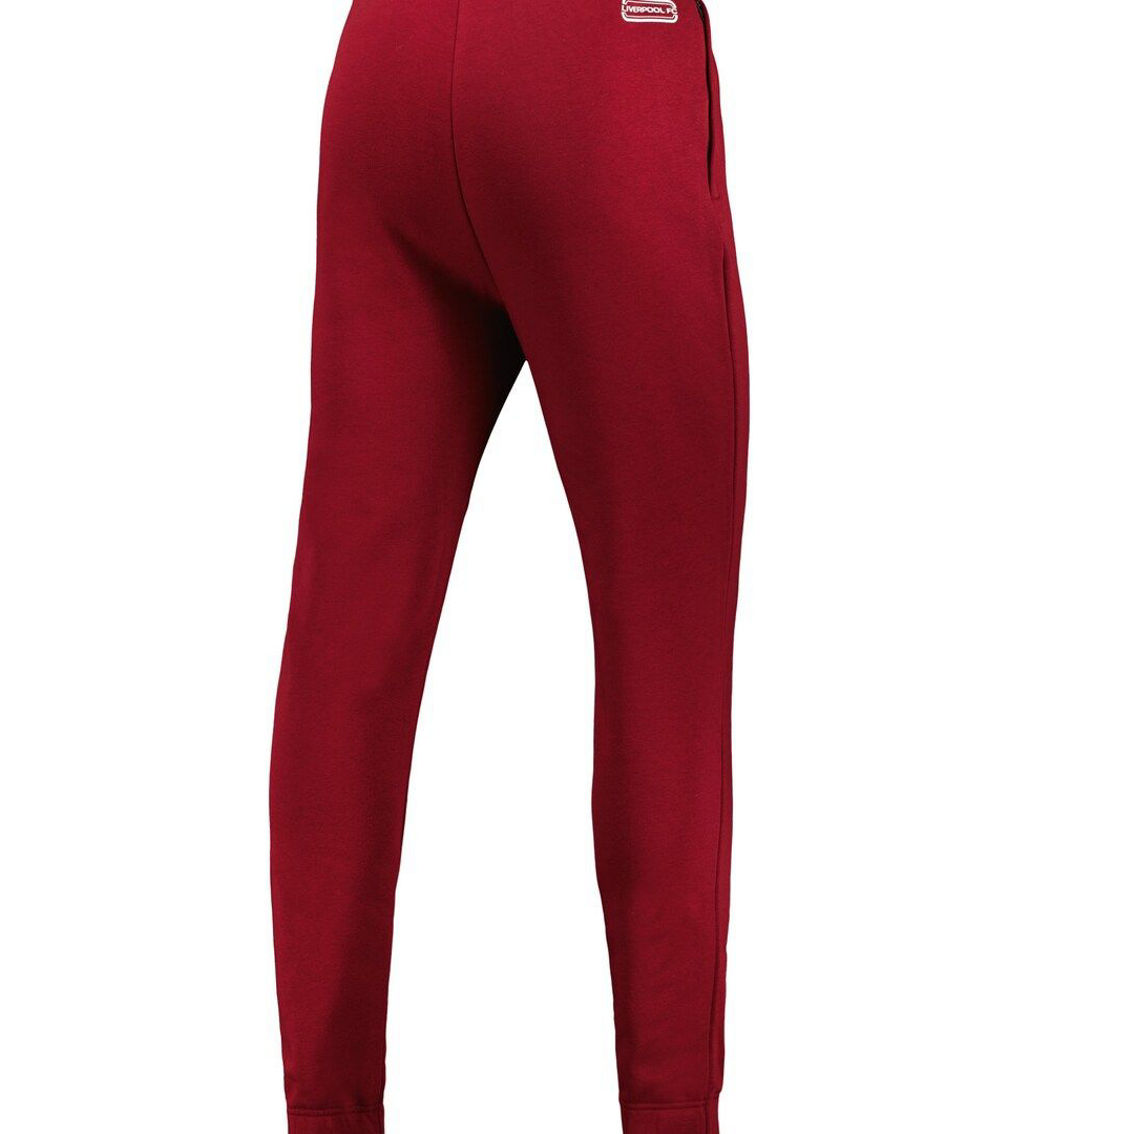 Nike Men's Red Liverpool Fleece Pants - Image 4 of 4